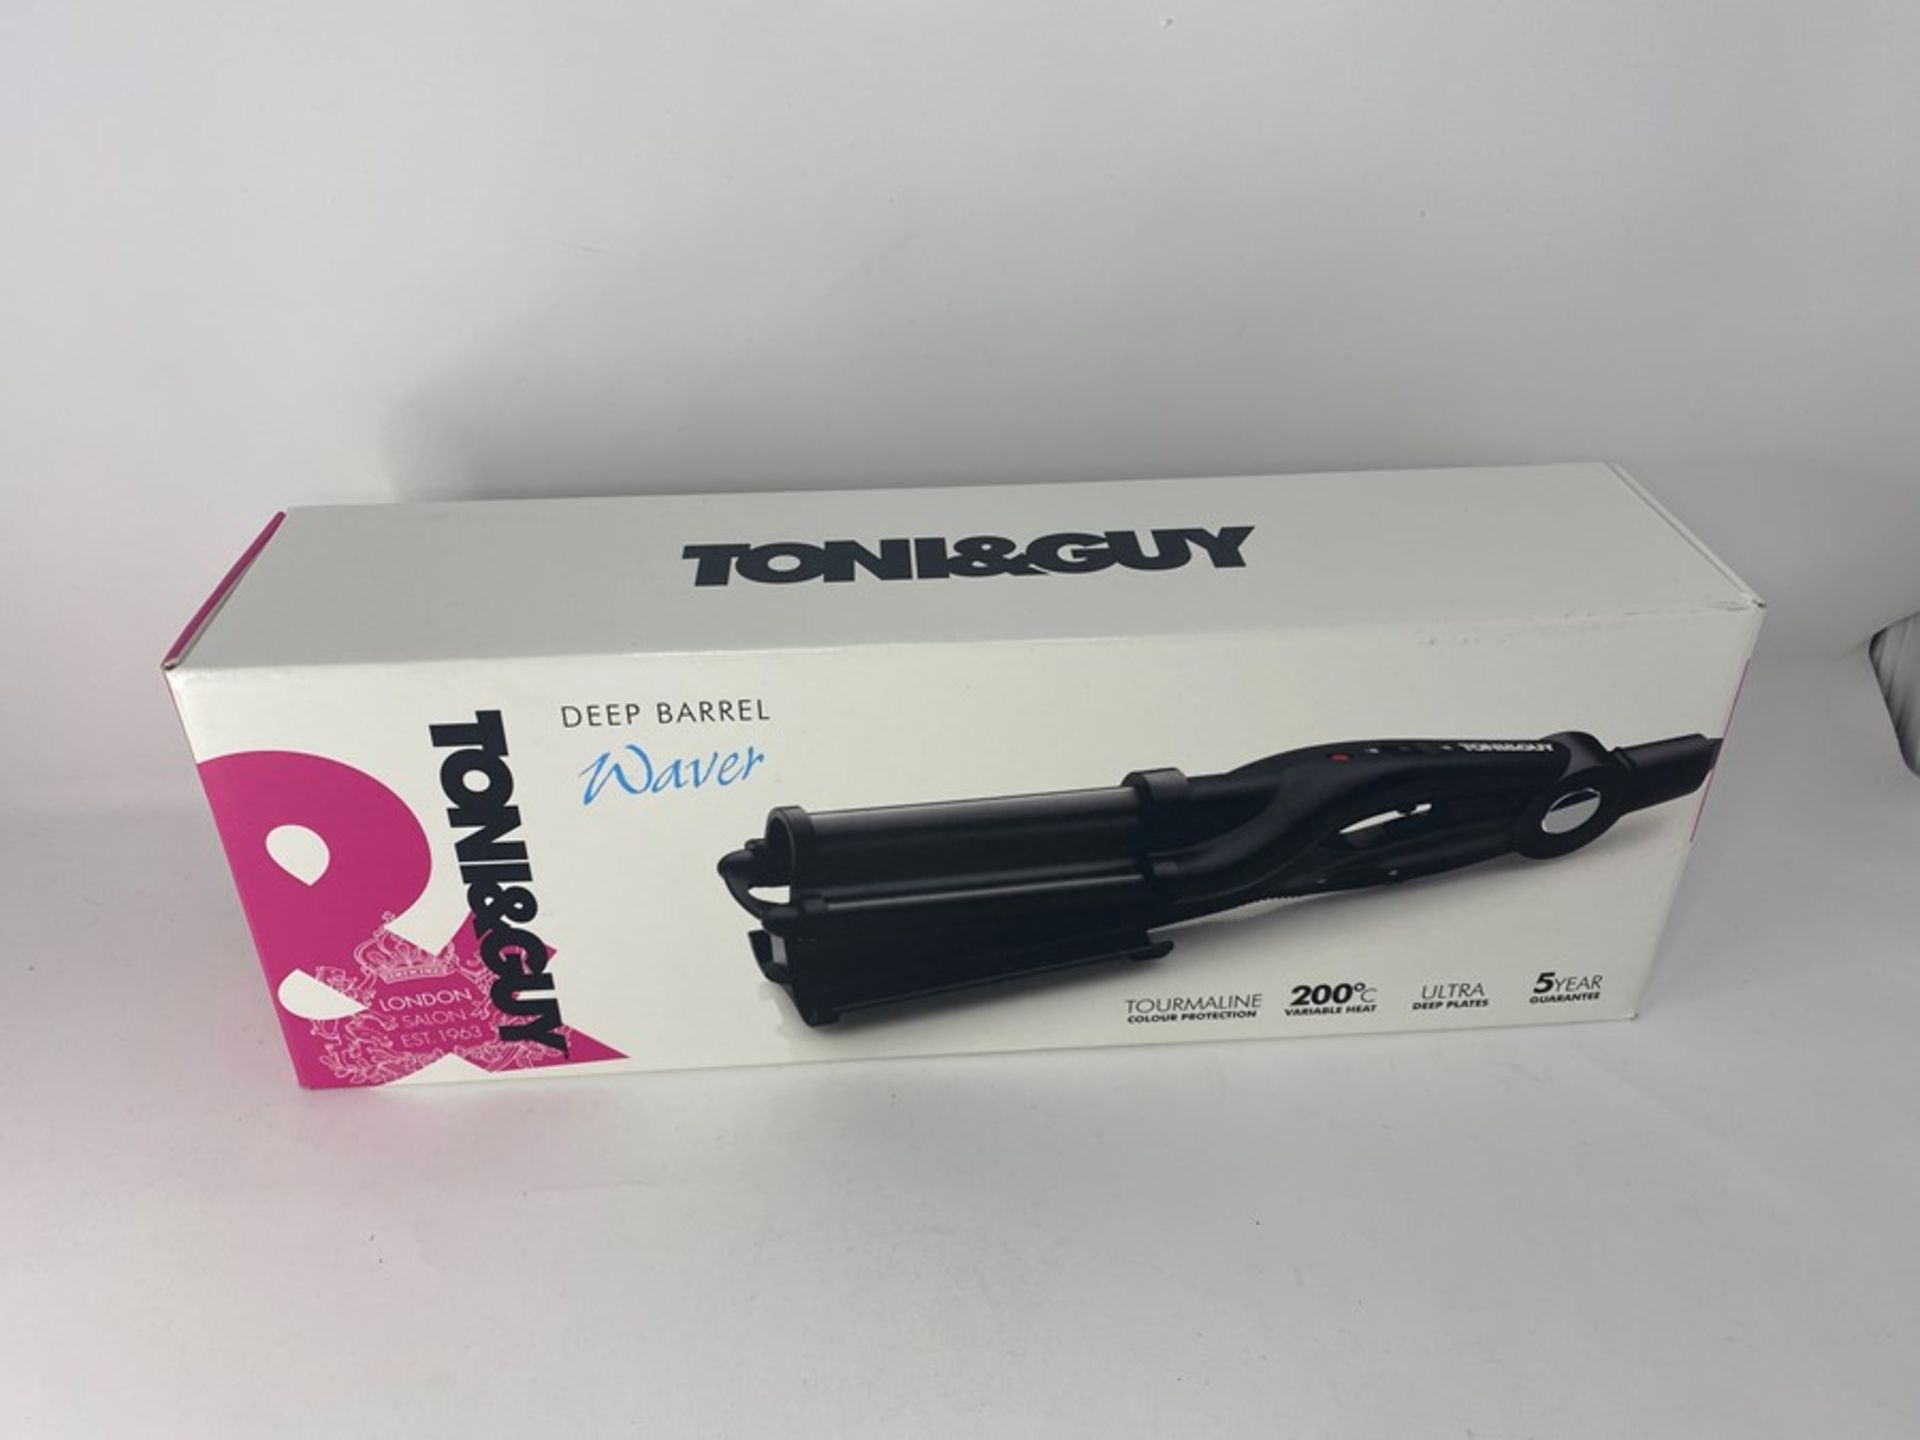 Toni & Guy Deep Barrel Hair Waver, 32 mm - Black - Image 2 of 4